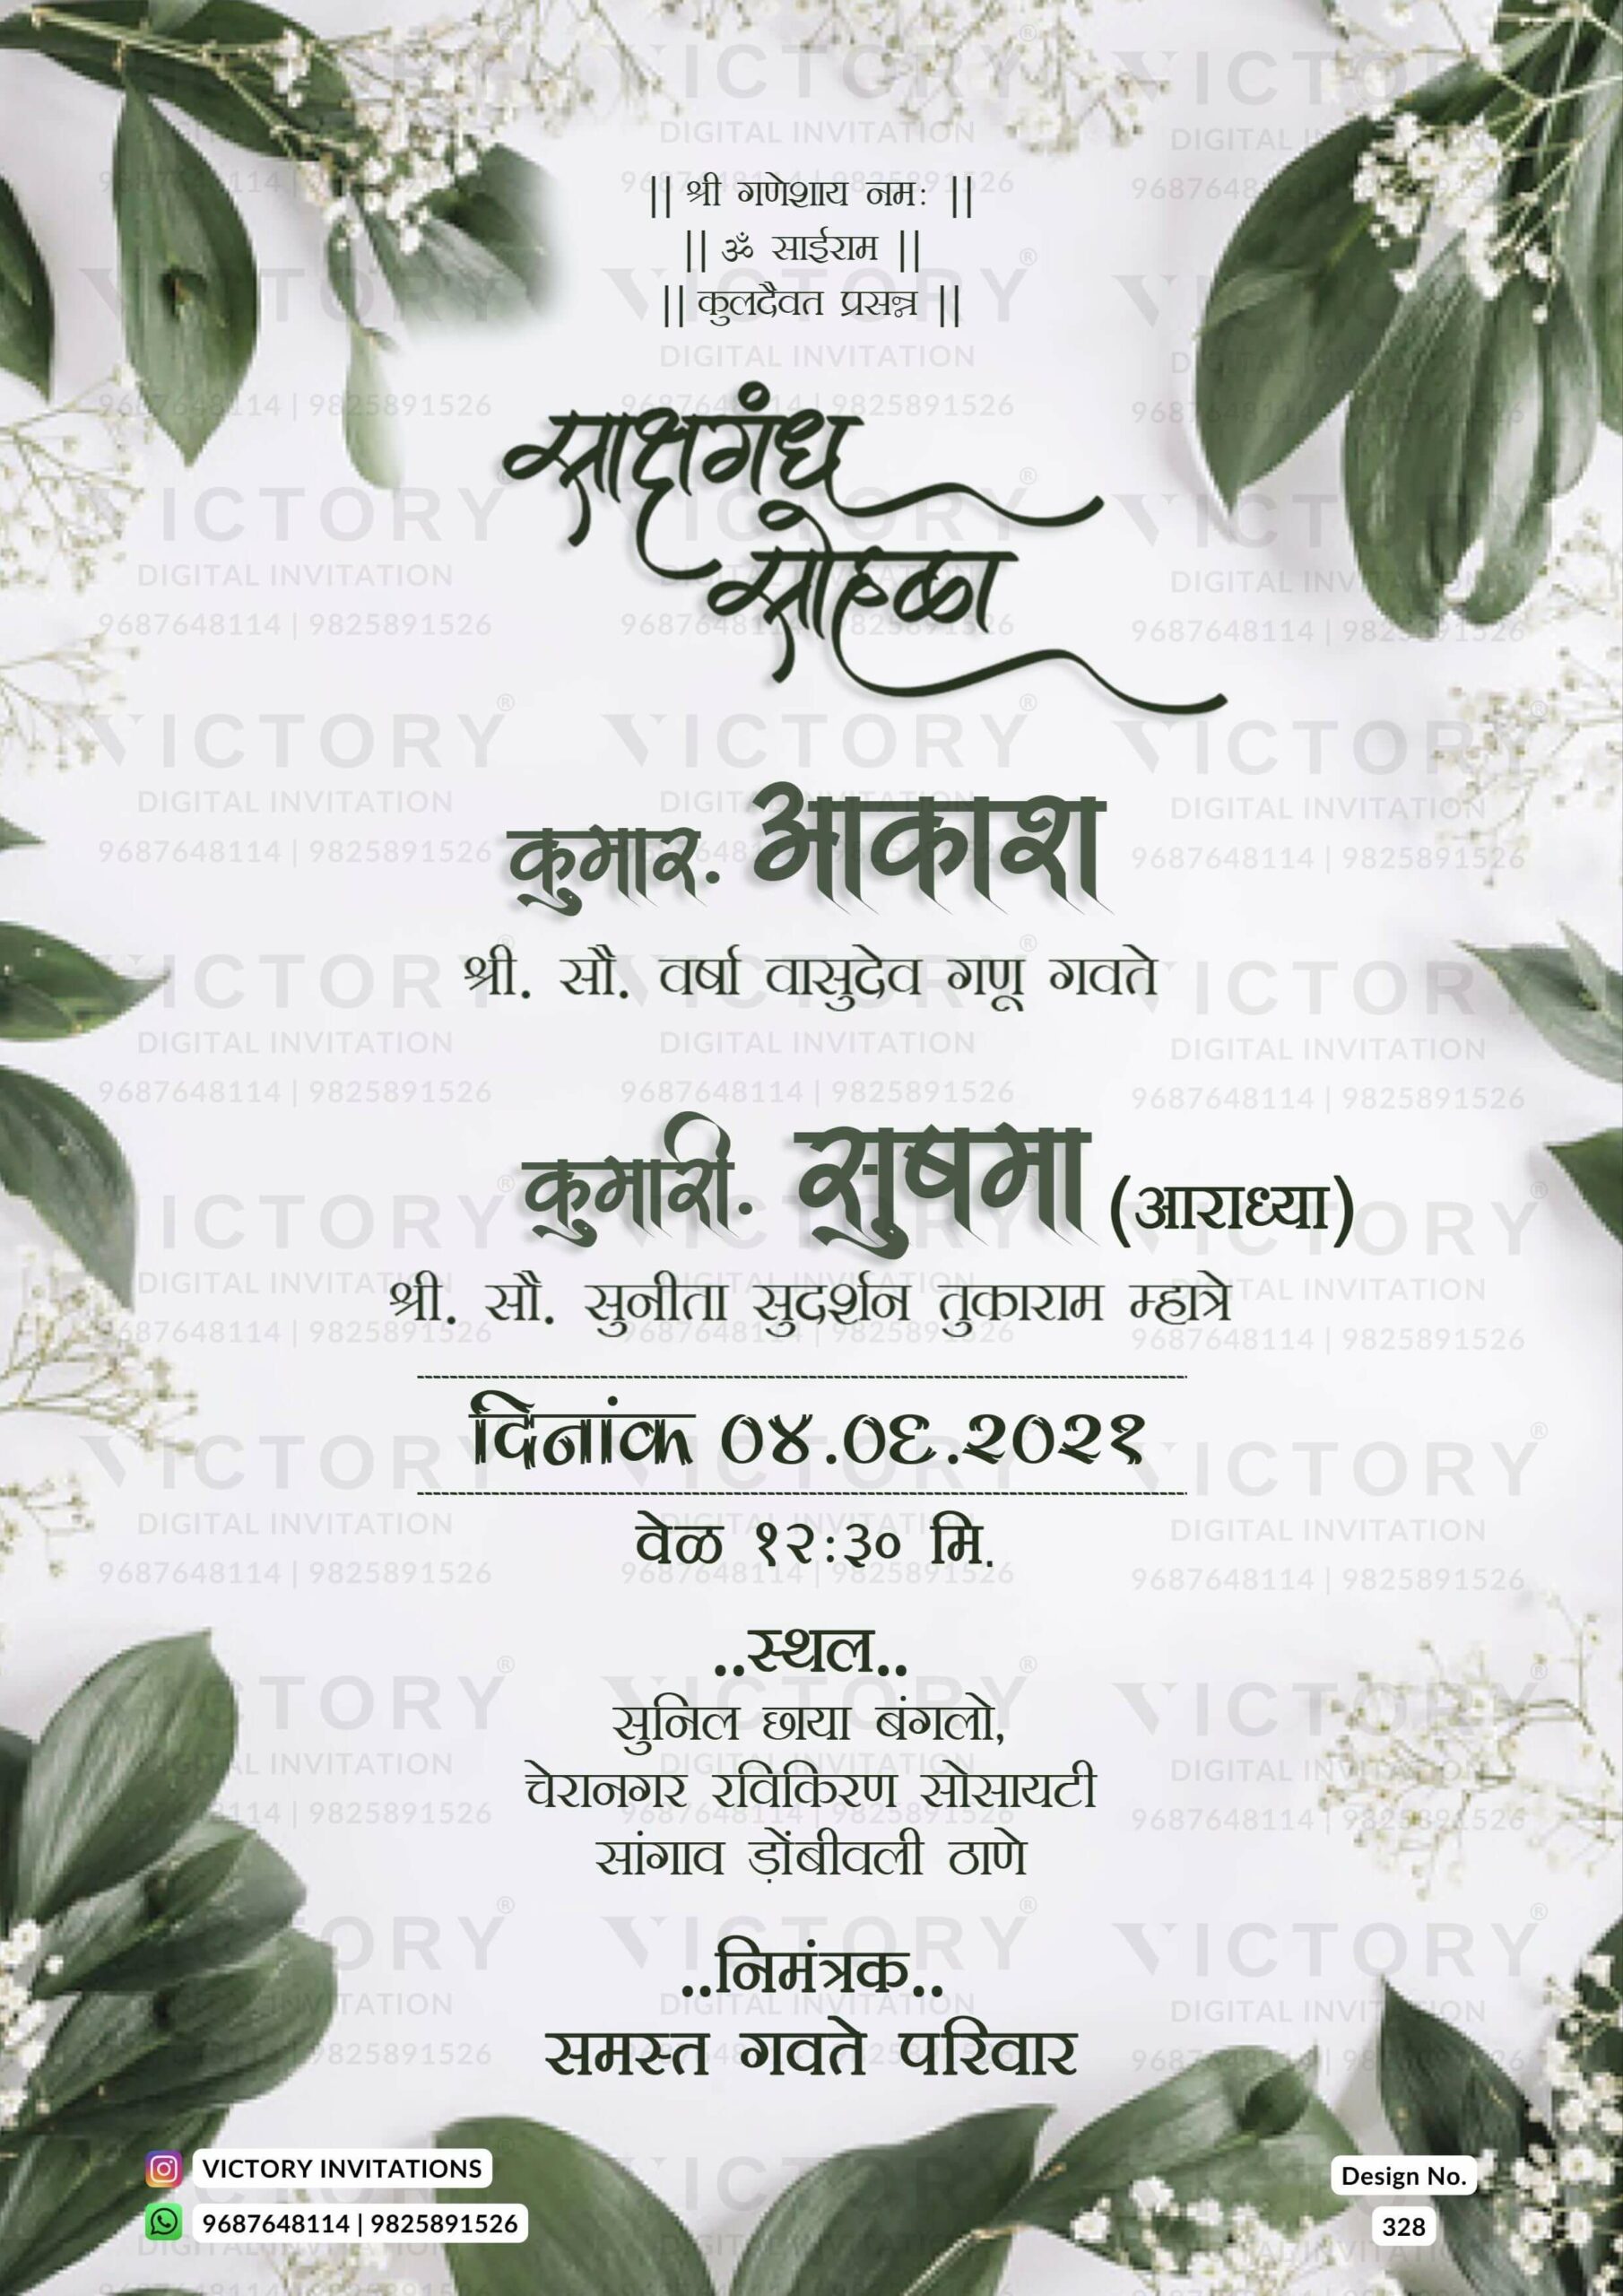 Engagement Digital Invitation Card in Hindi Designs by Victory Digital  Invitation - www.victoryinvitations.com